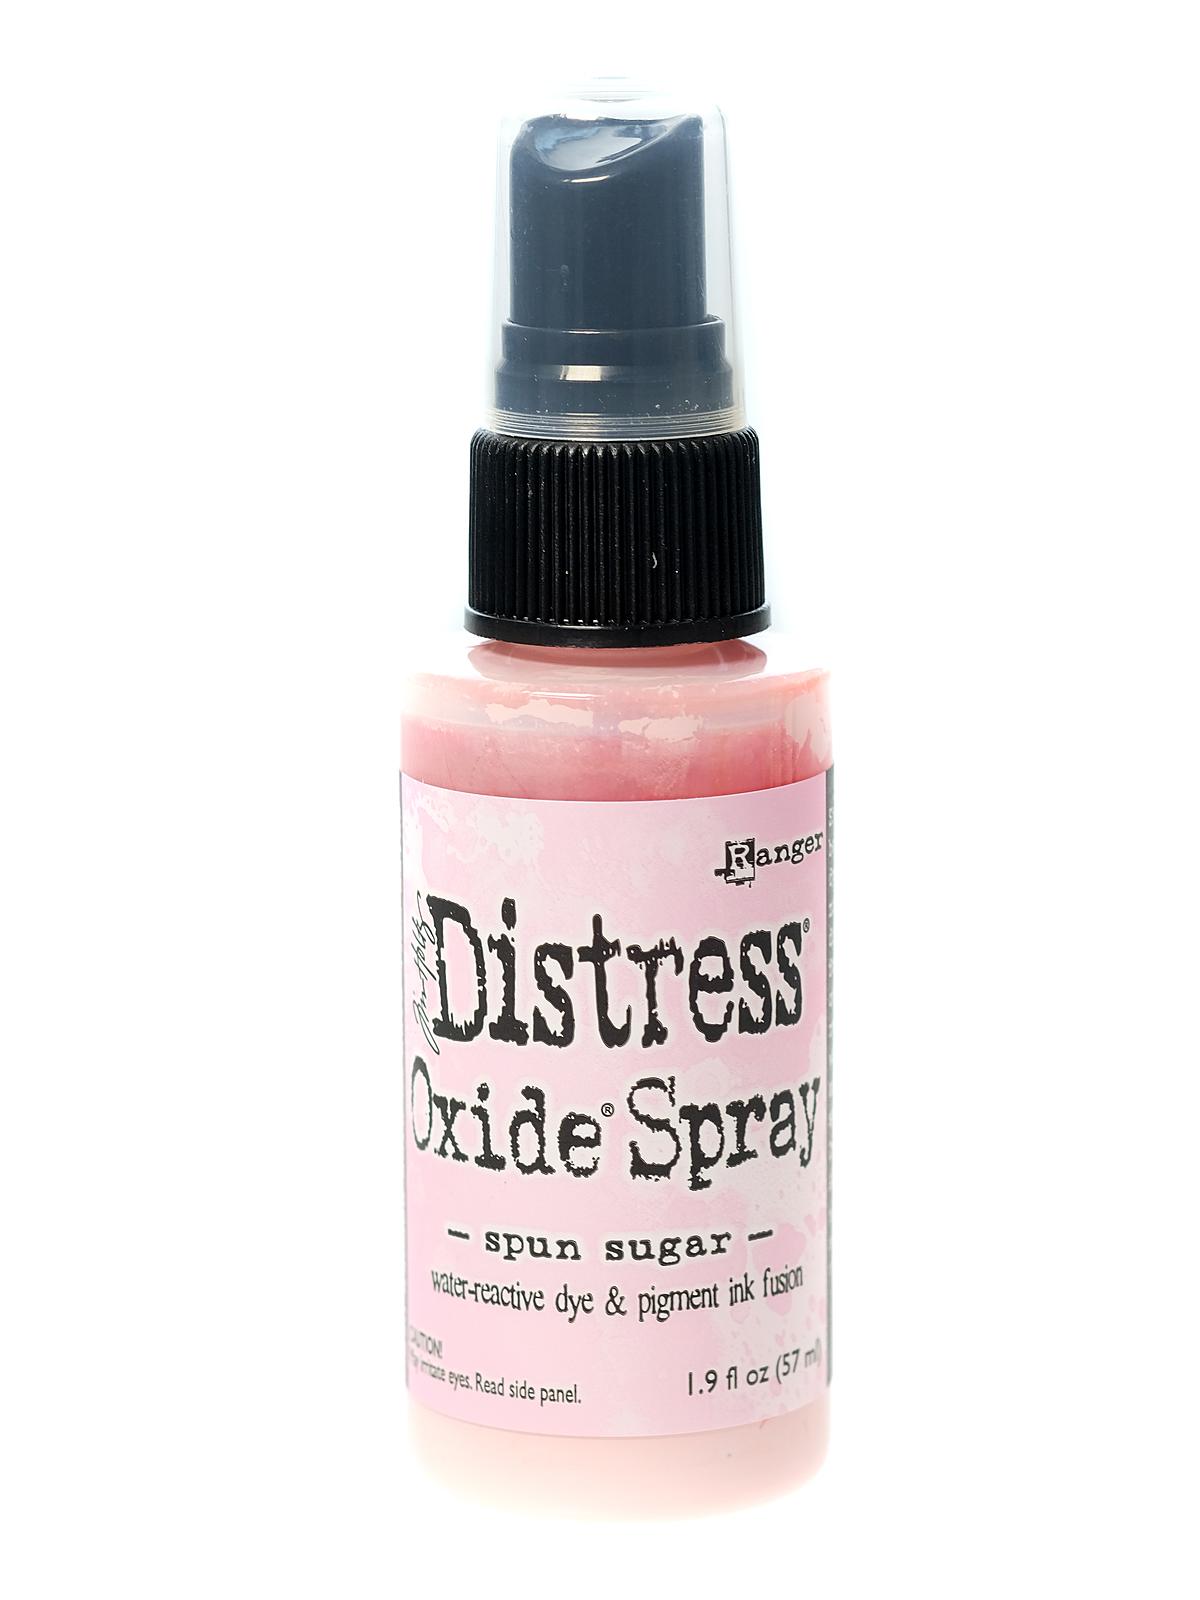 Tim Holtz Distress Oxide Sprays Spun Sugar 2 Oz. Bottle